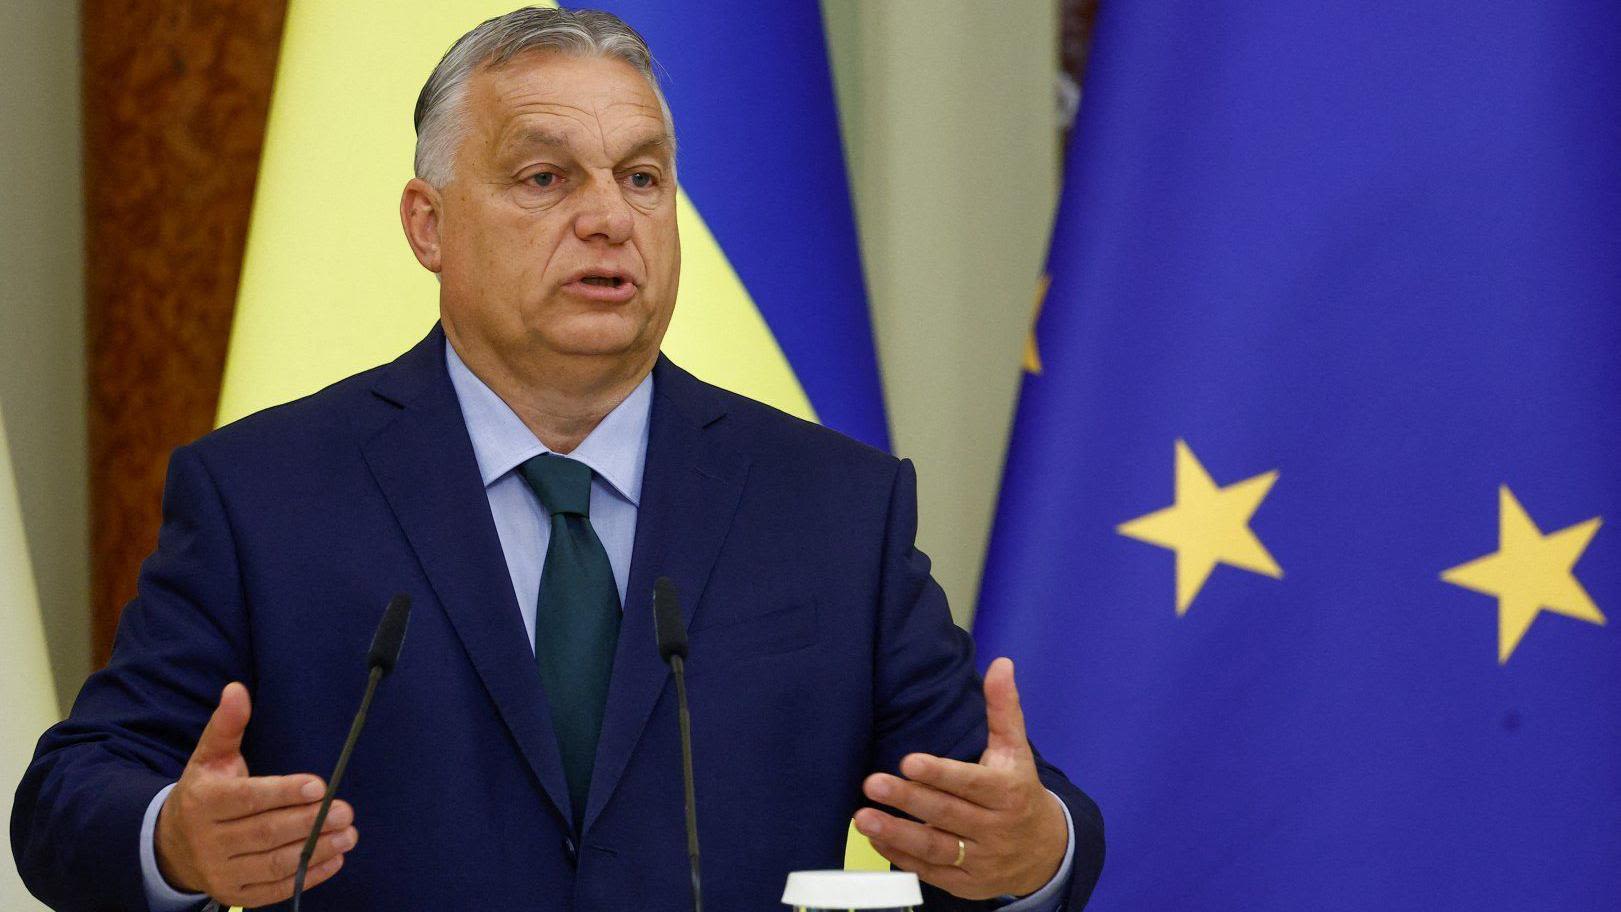 Hungary's PM meets Putin for talks on Ukraine